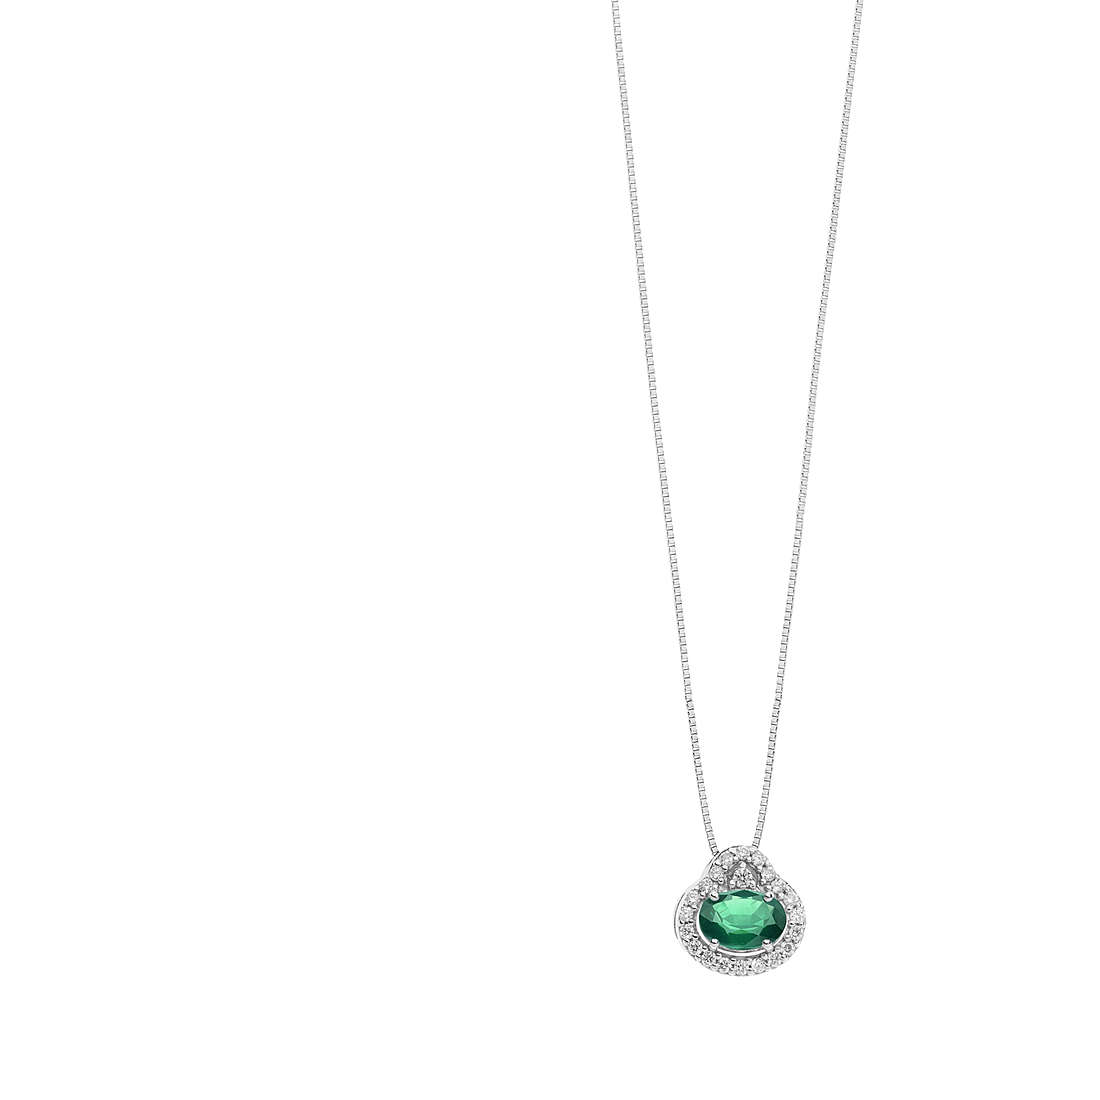 Orion GLB 1480 Women’s Jewelry Necklace